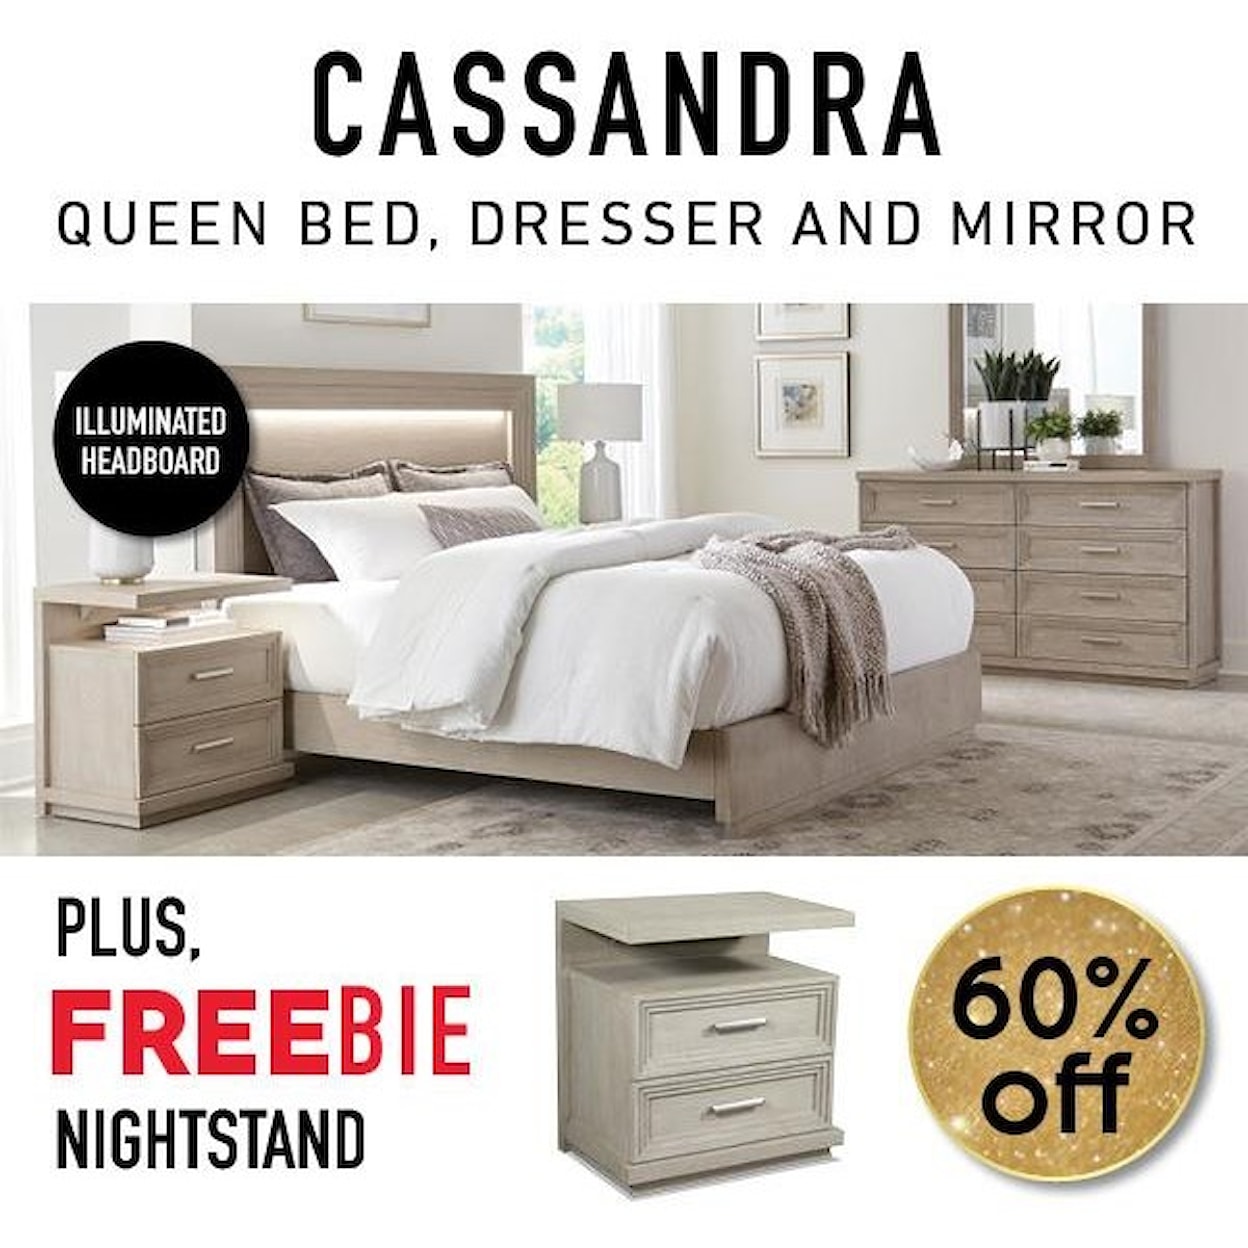 Riverside Furniture Cassandra Cassandra Queen Bed Package with Freebie!